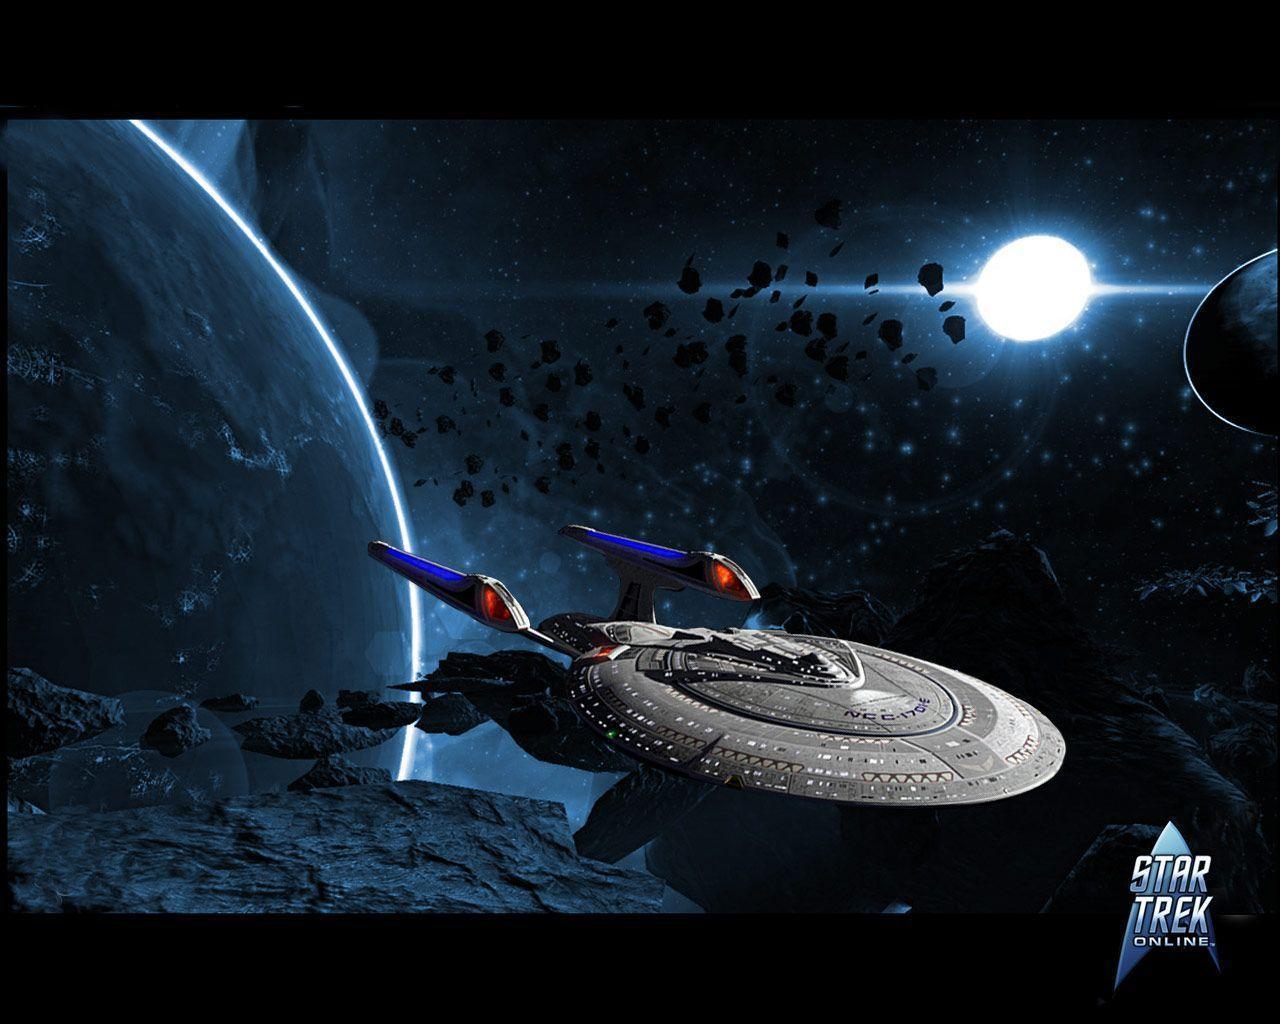 Star Trek The Movies Star Trek Insignia Picture to pin